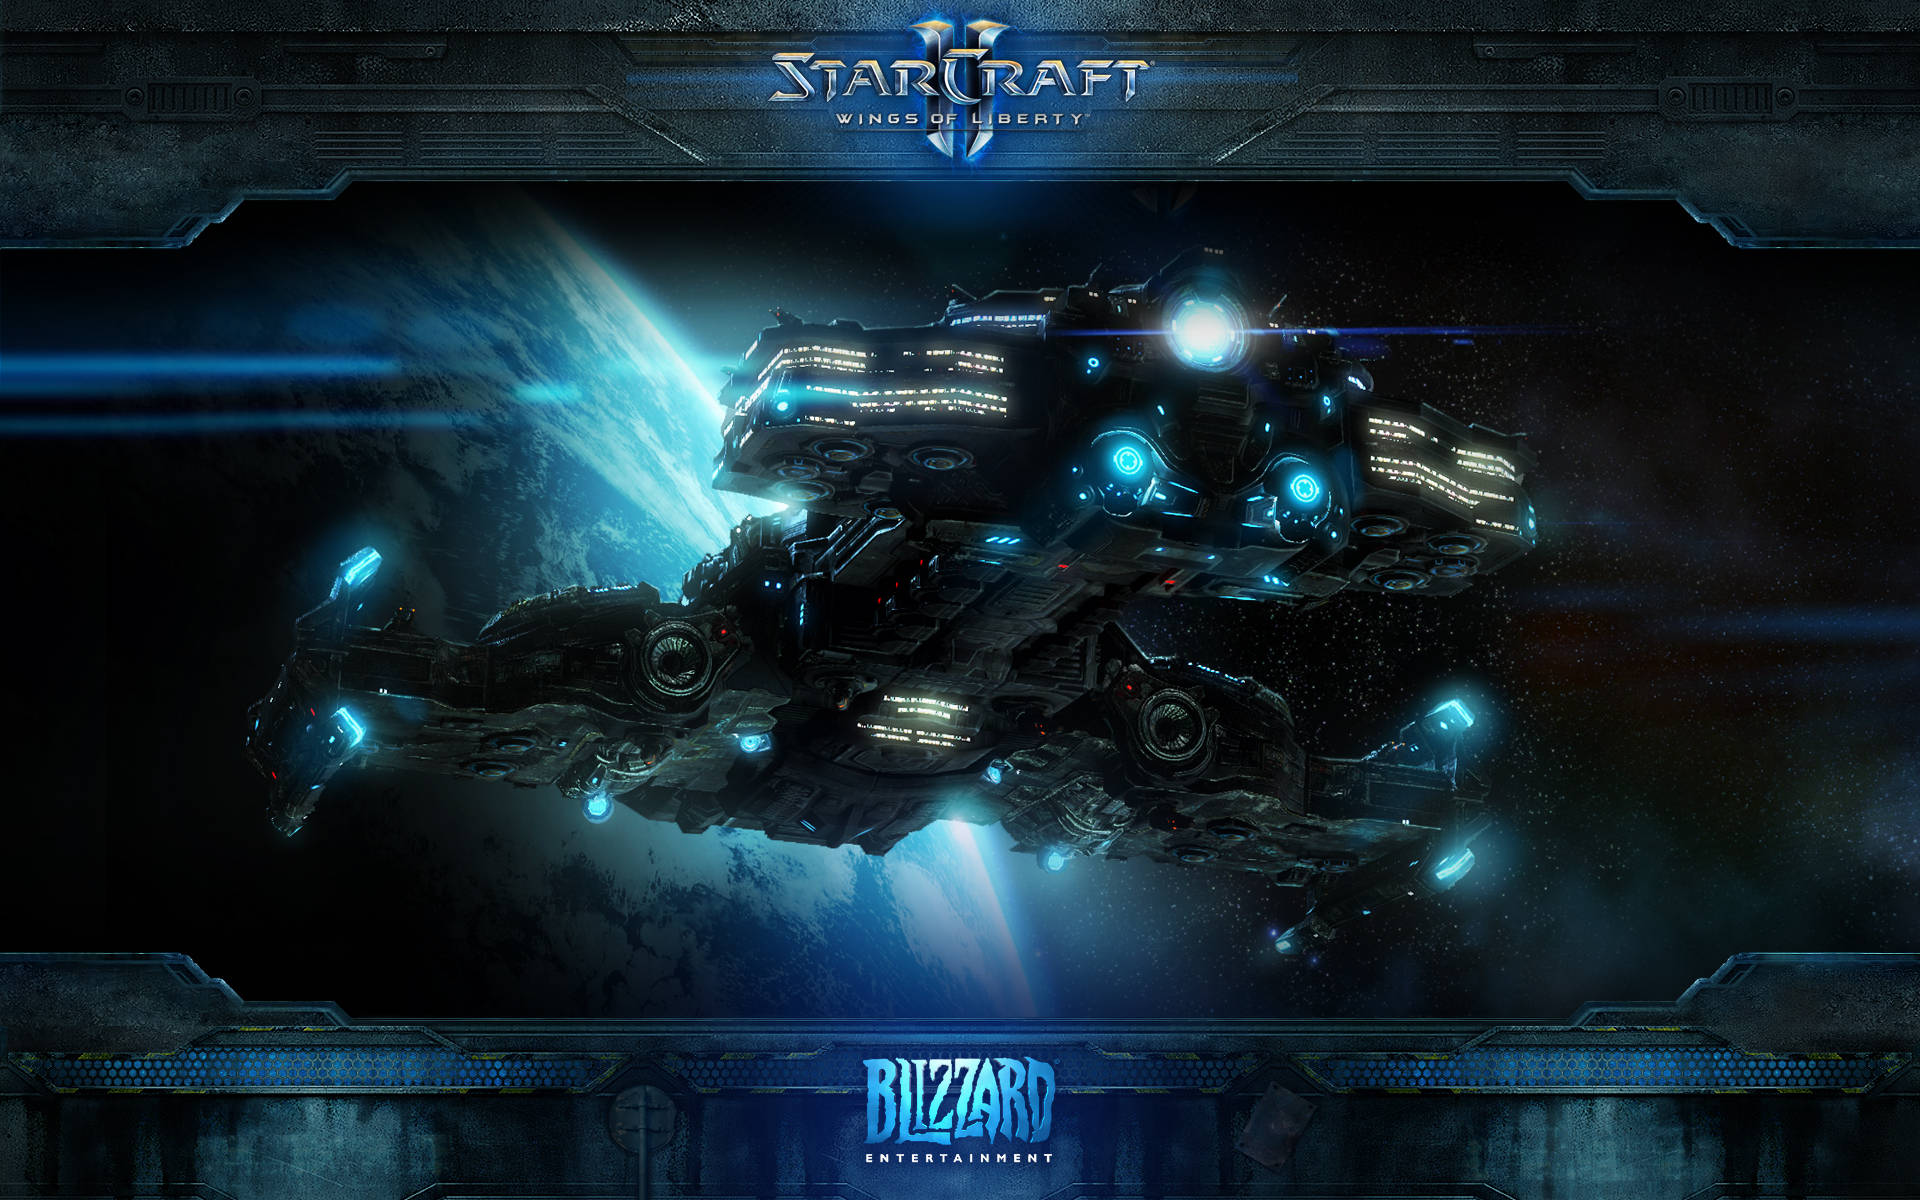 Starcraft 2 Blizzard Entertainment Wallpaper